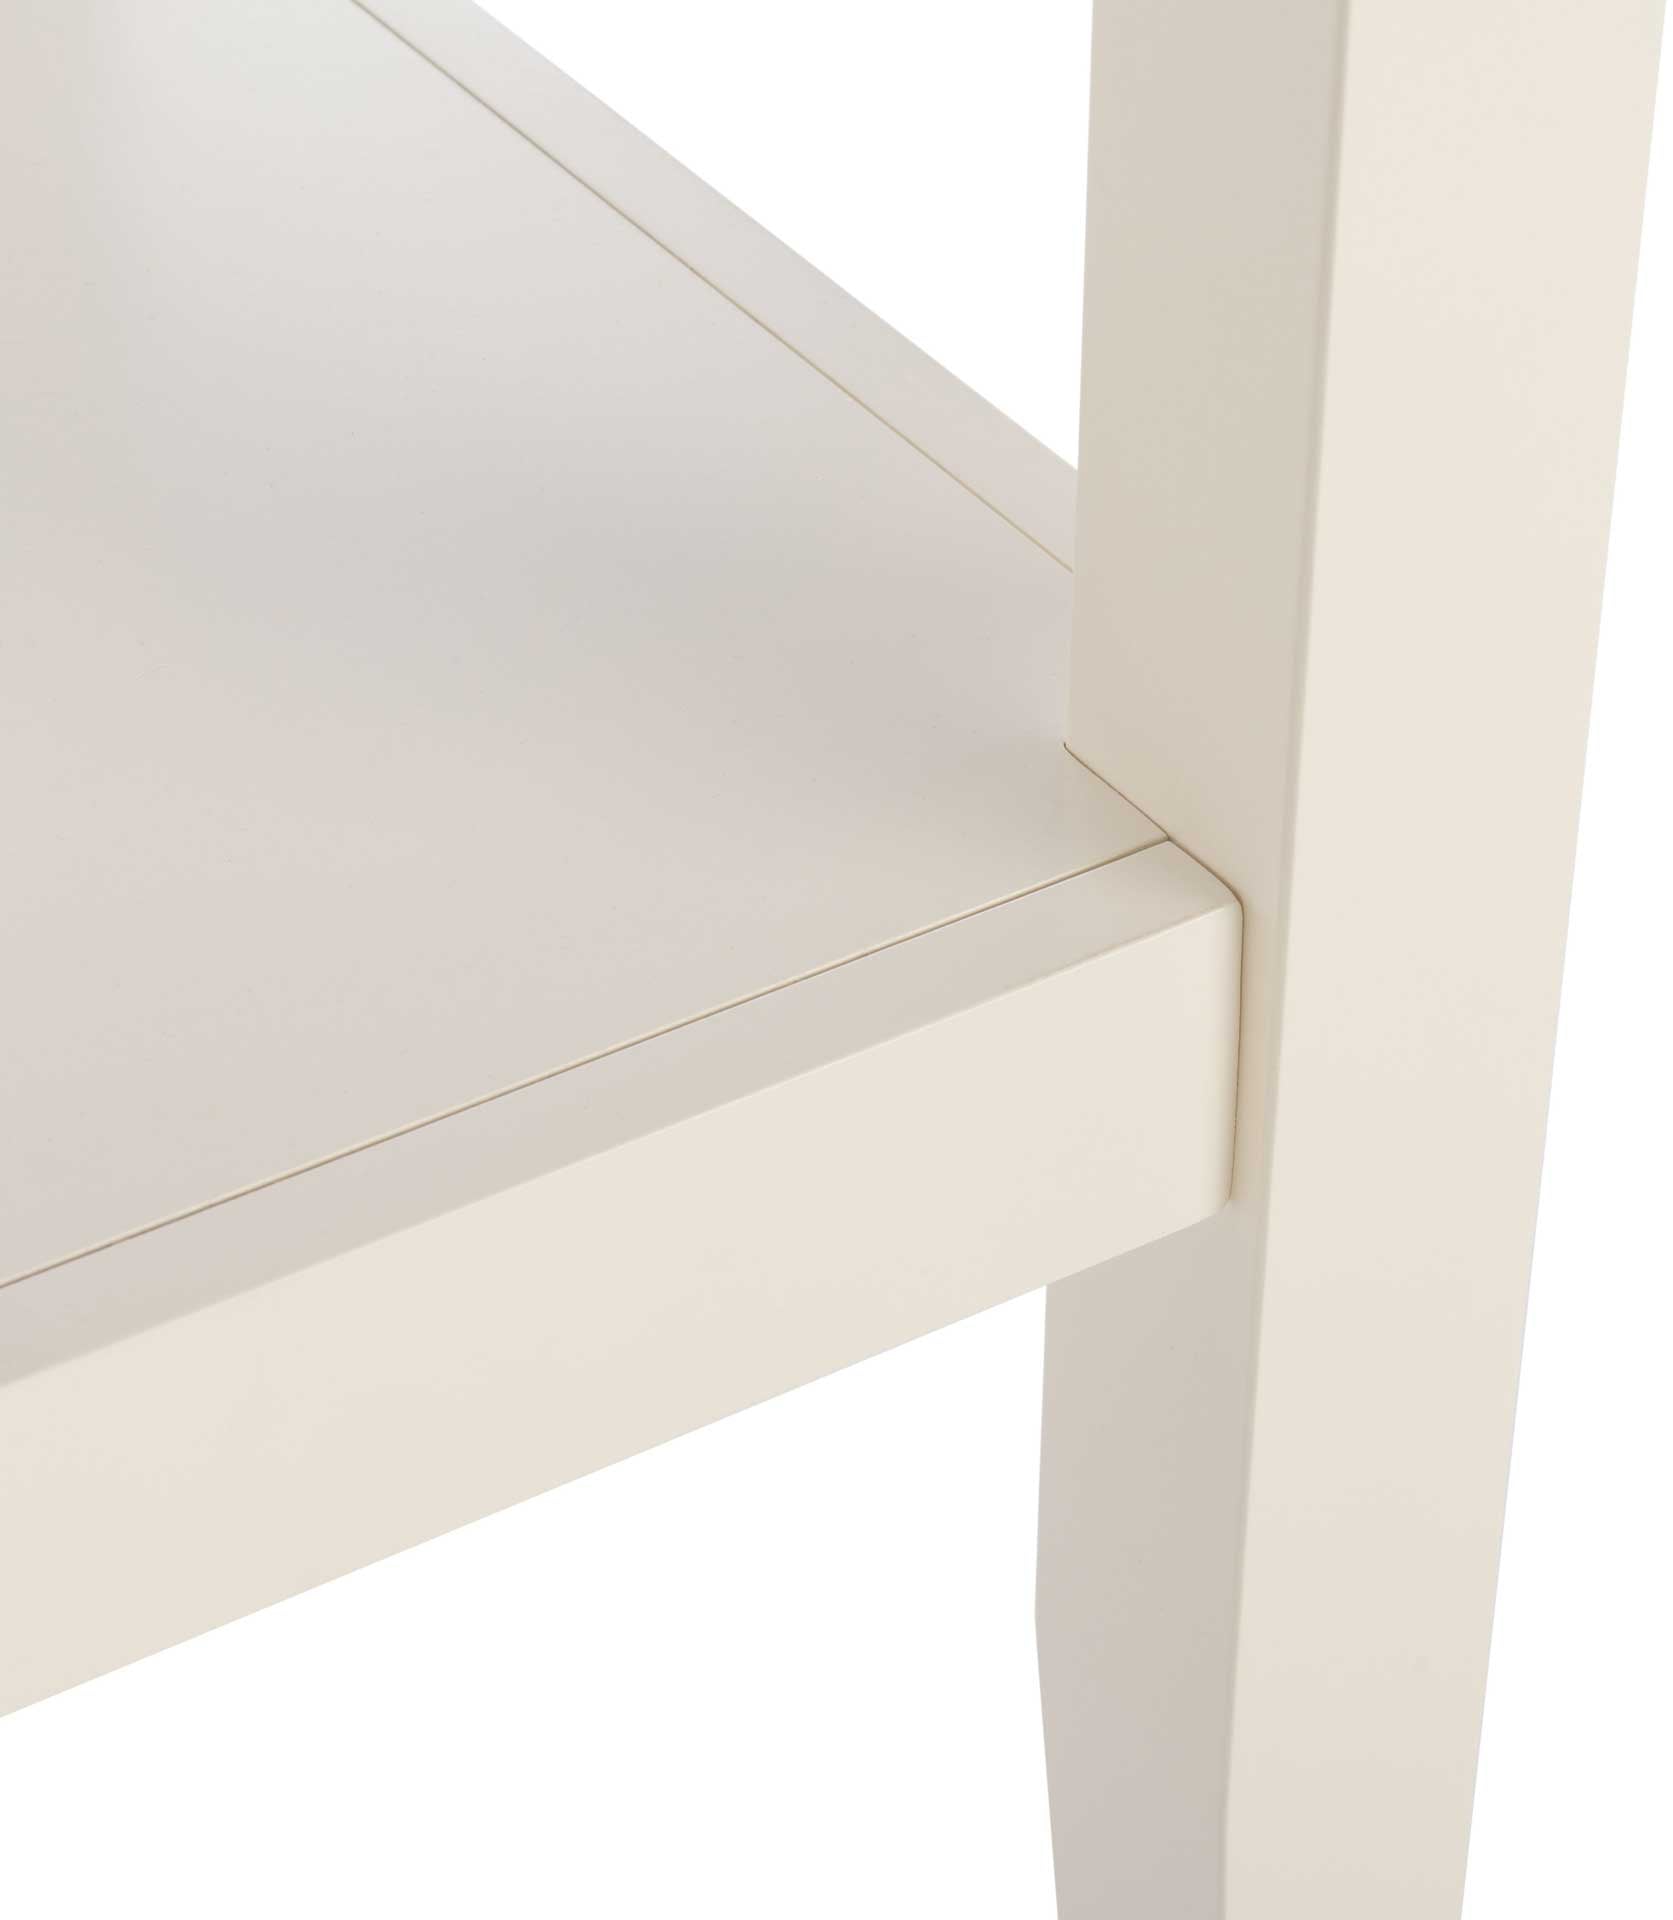 Yuki Square Counter Table White/Natural